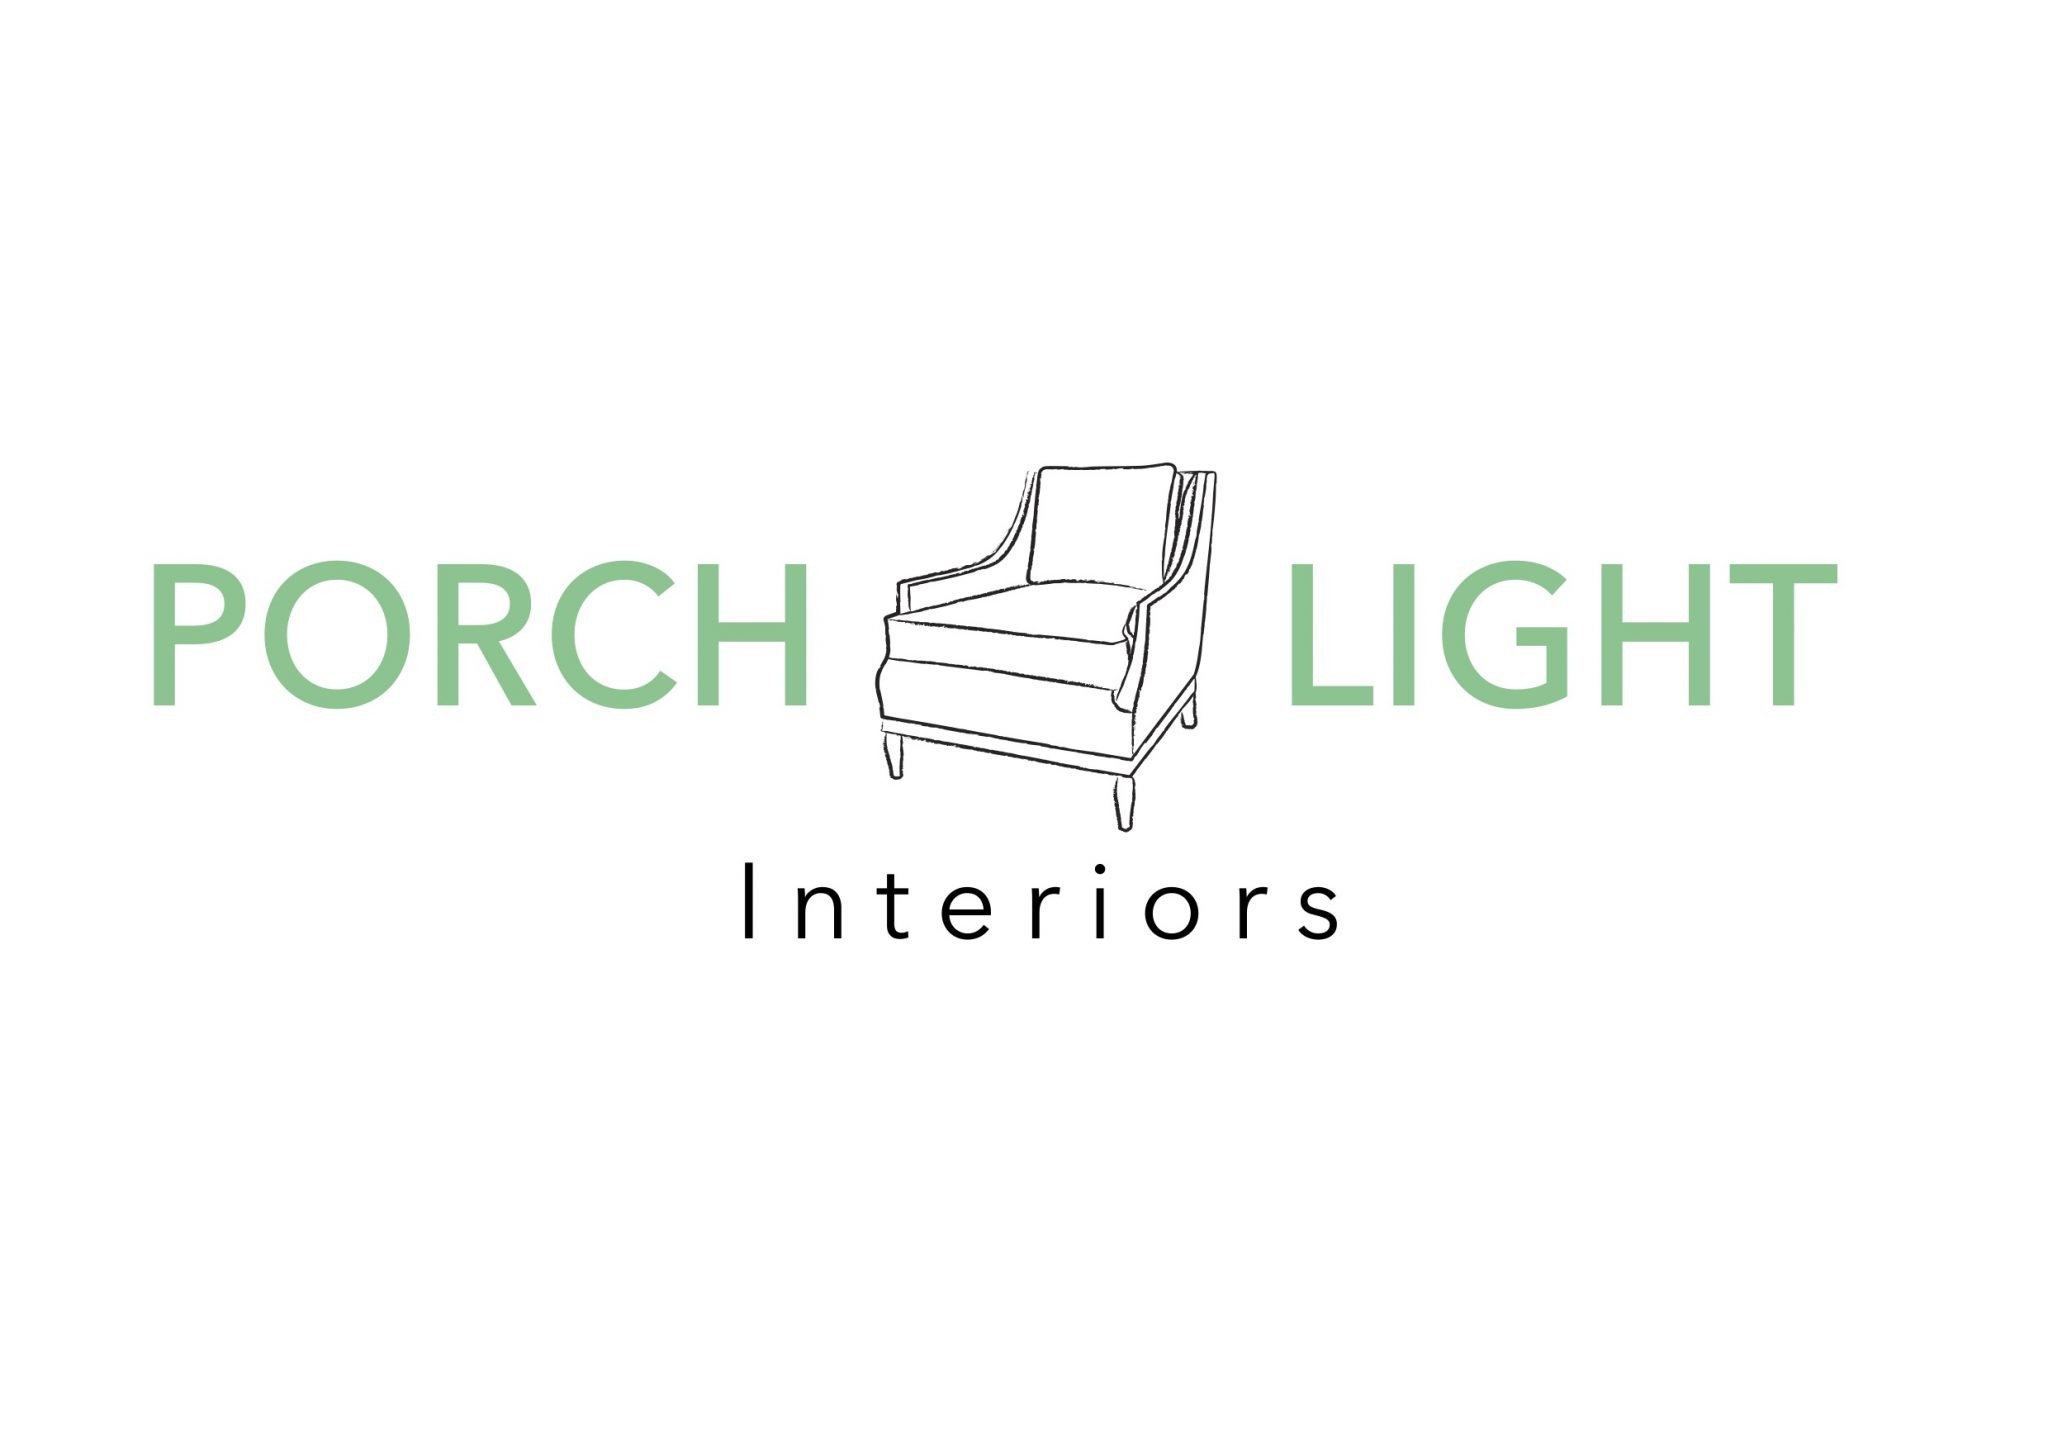 Porch Light Interiors